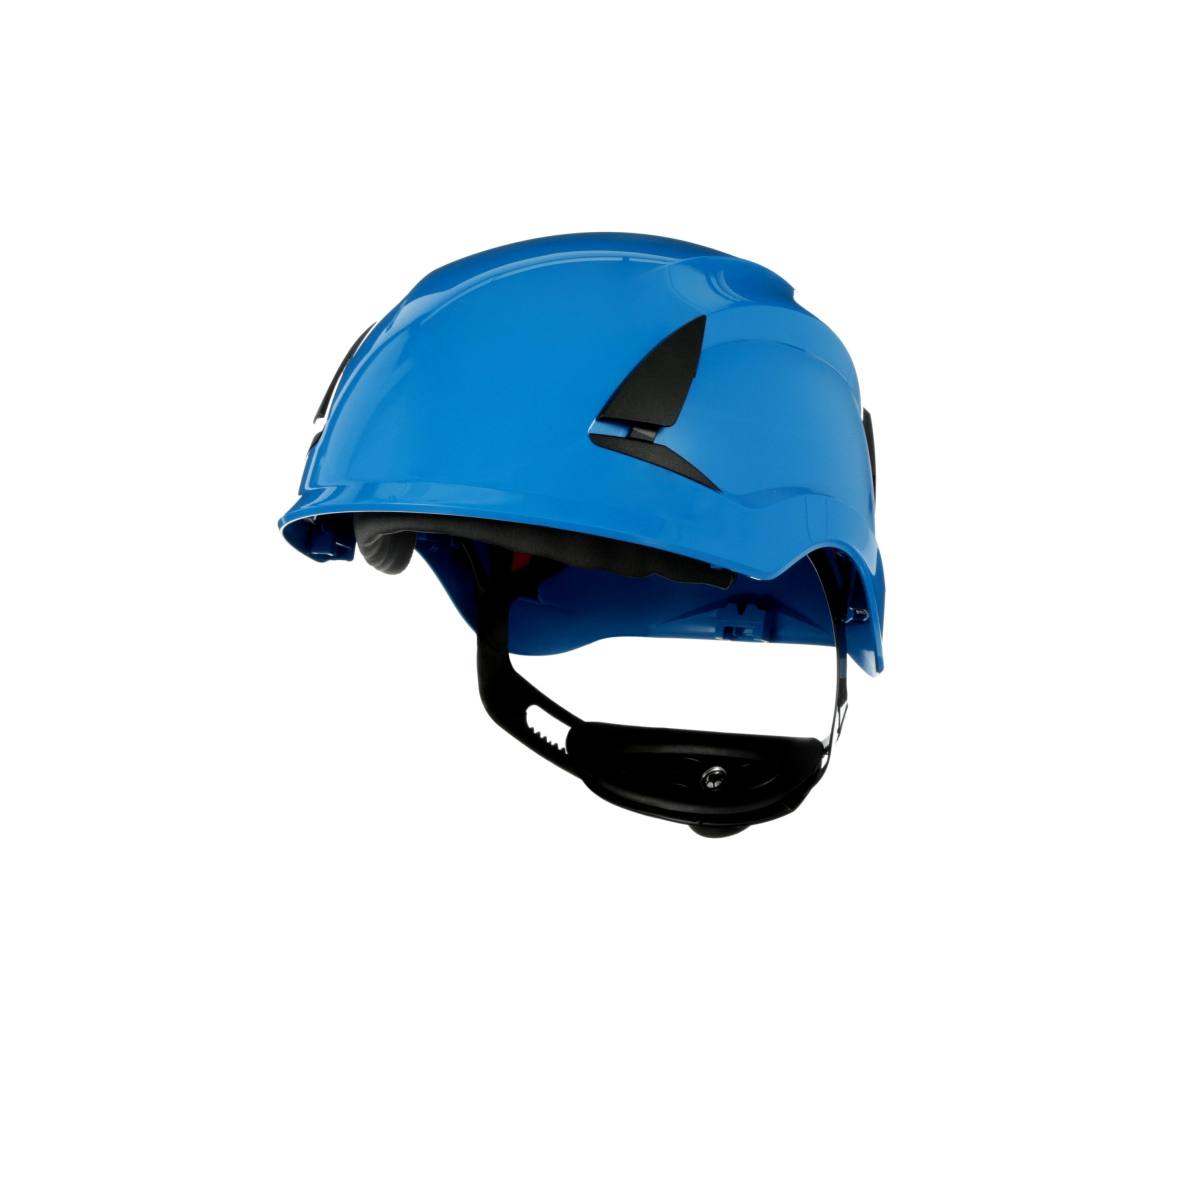 3M Casco de seguridad SecureFit, X5503NVE-CE, azul, no ventilado, CE